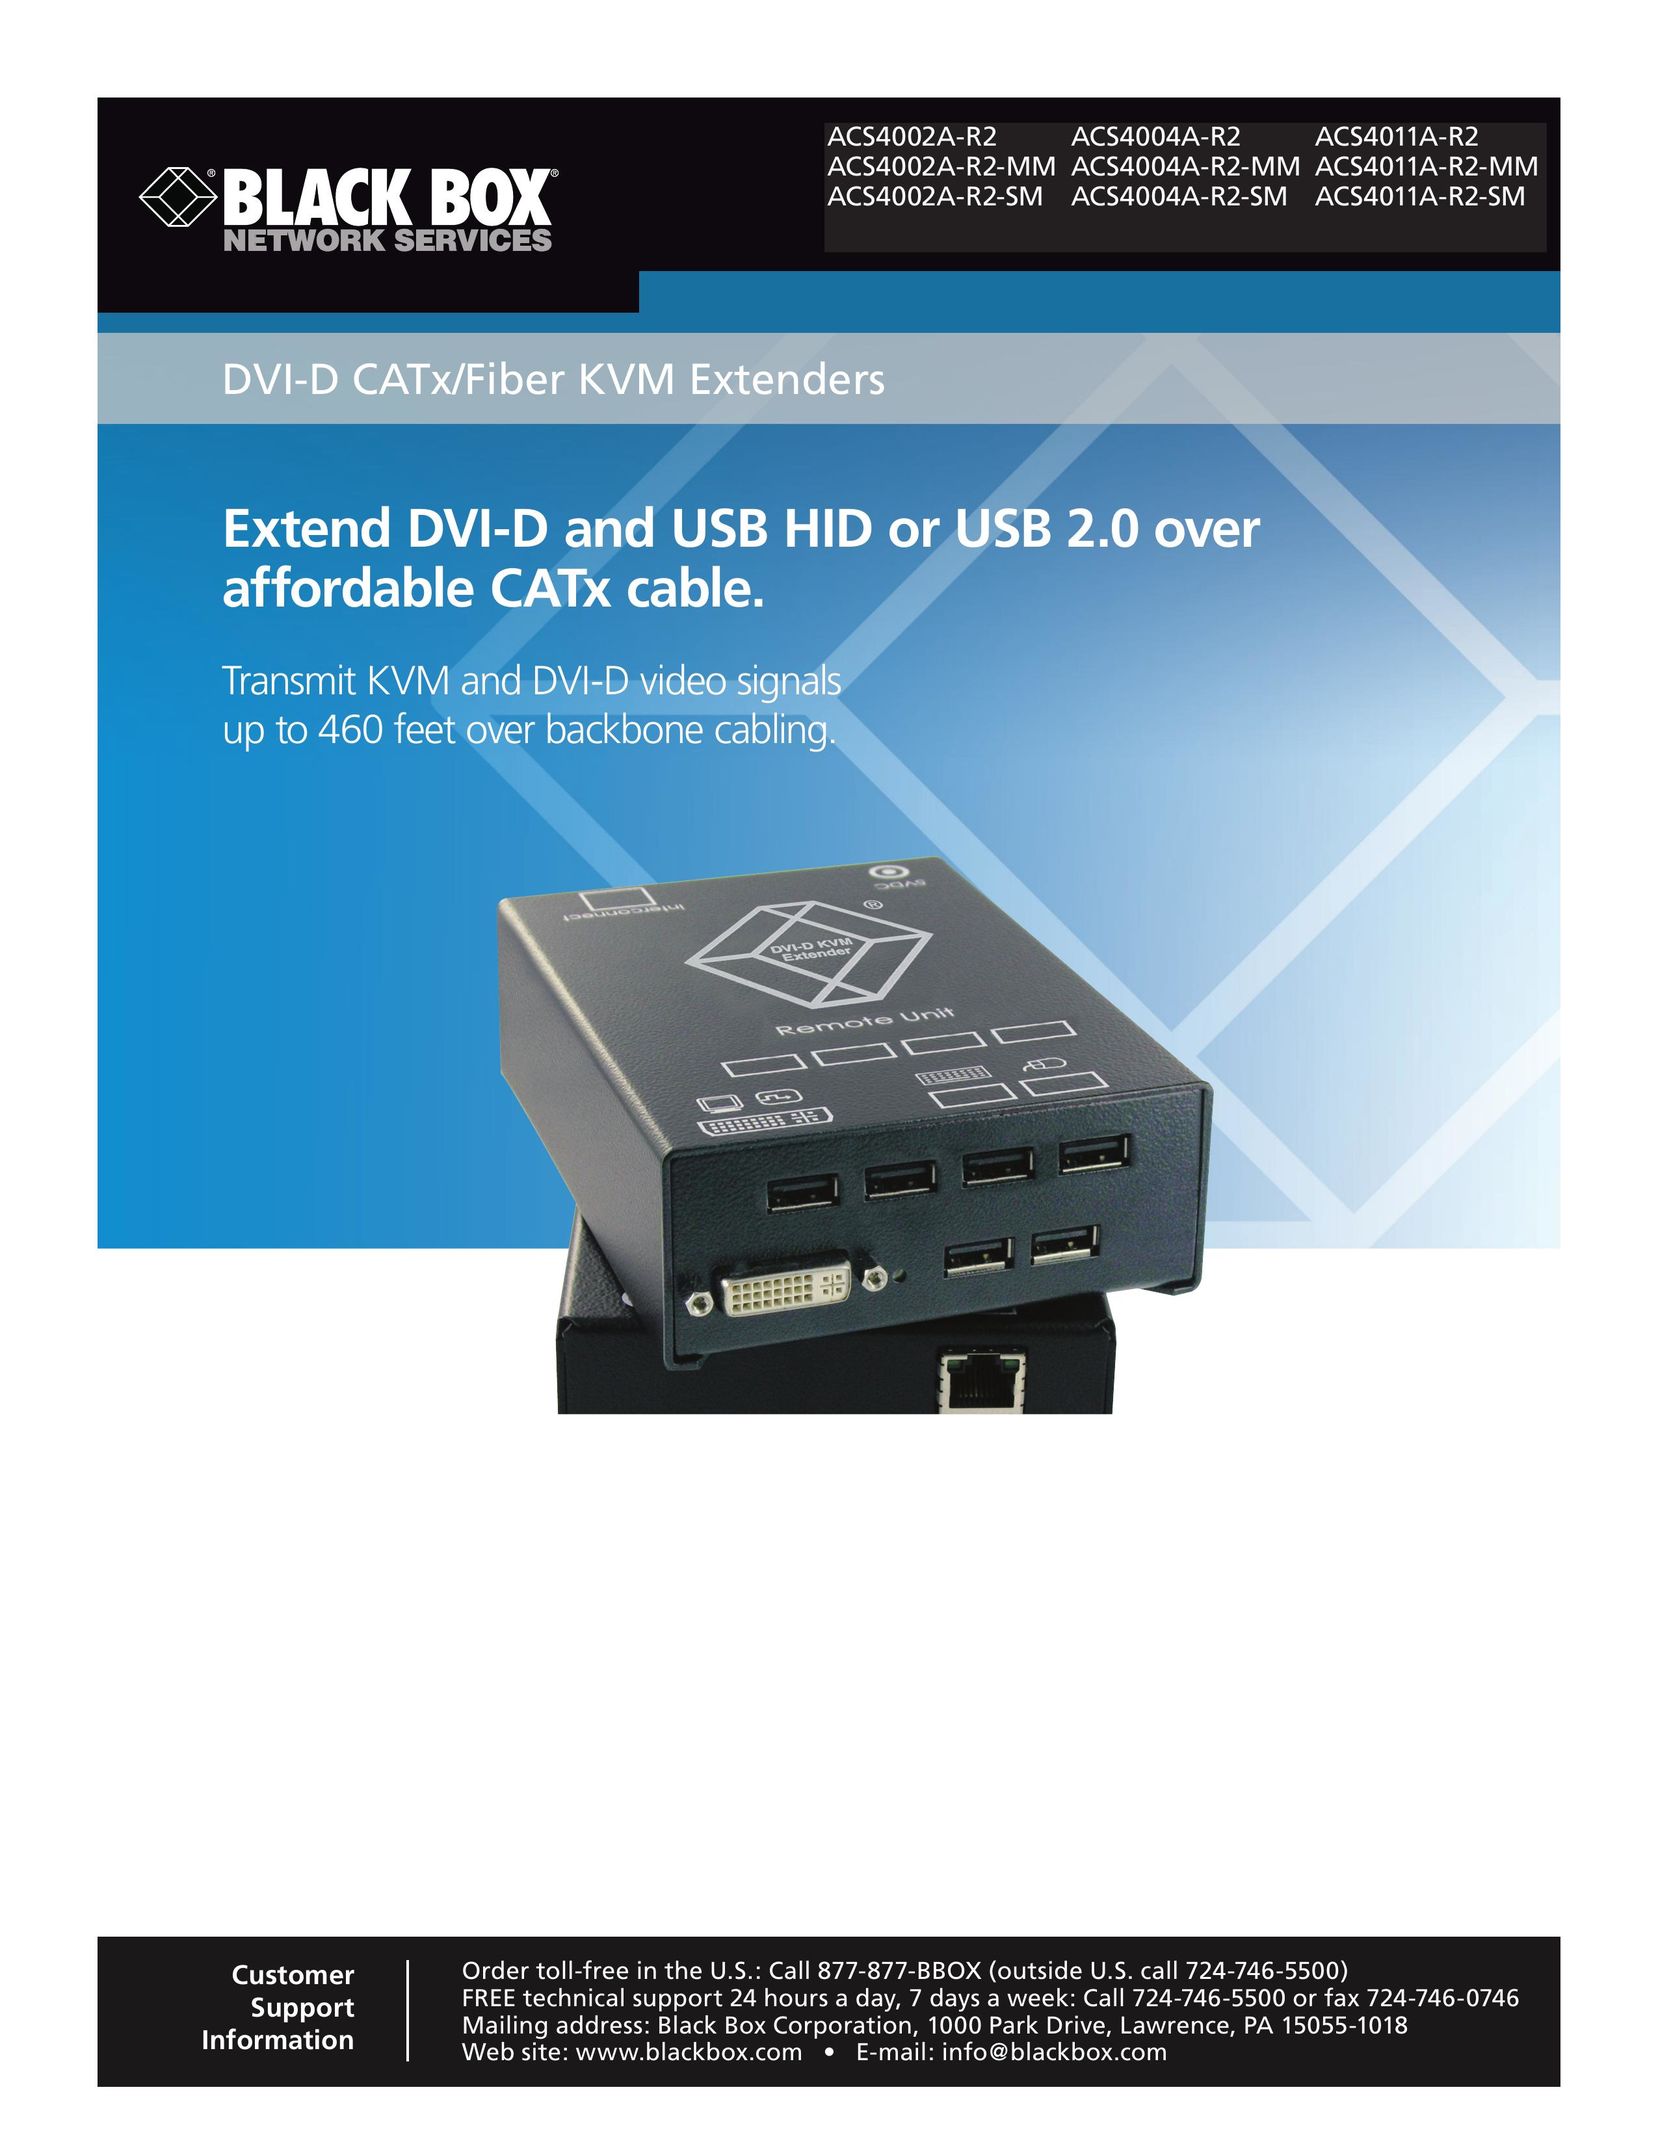 Black Box ACS4004A-R2 Network Hardware User Manual